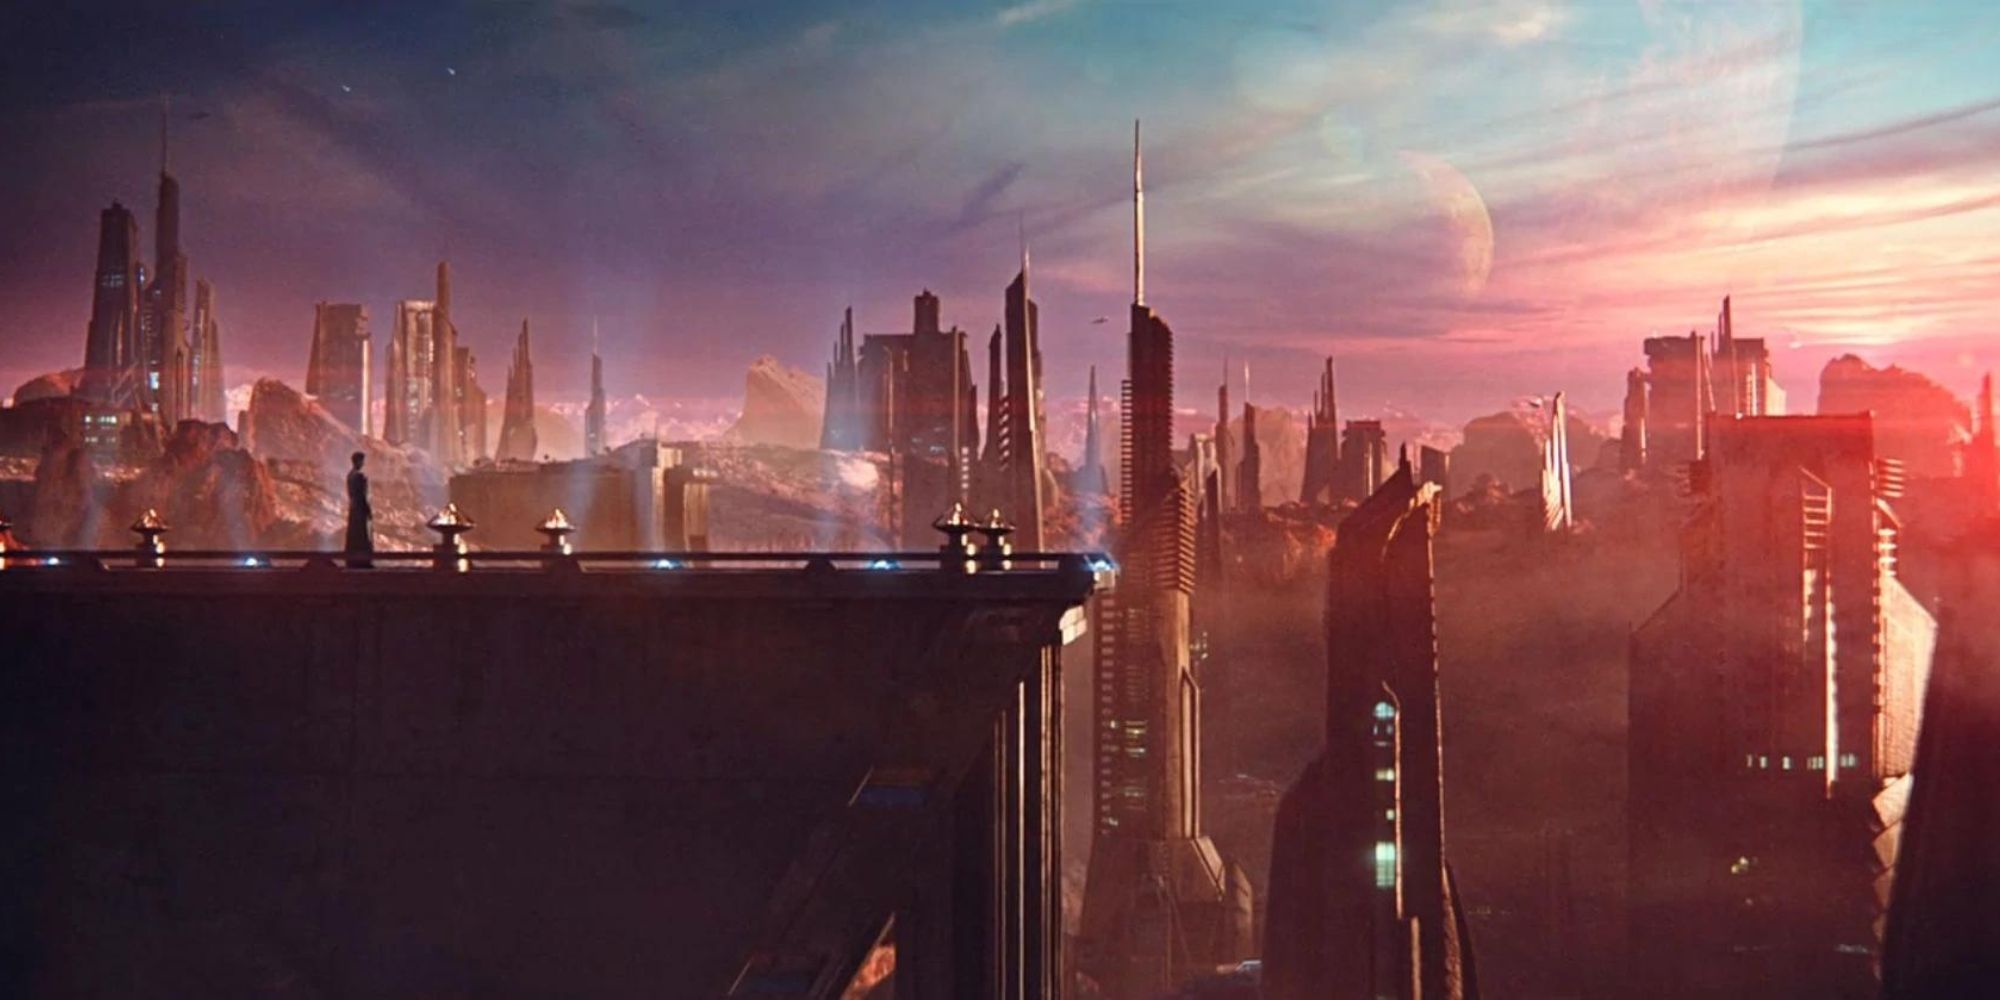 A city on the planet Vulcan in Star Trek